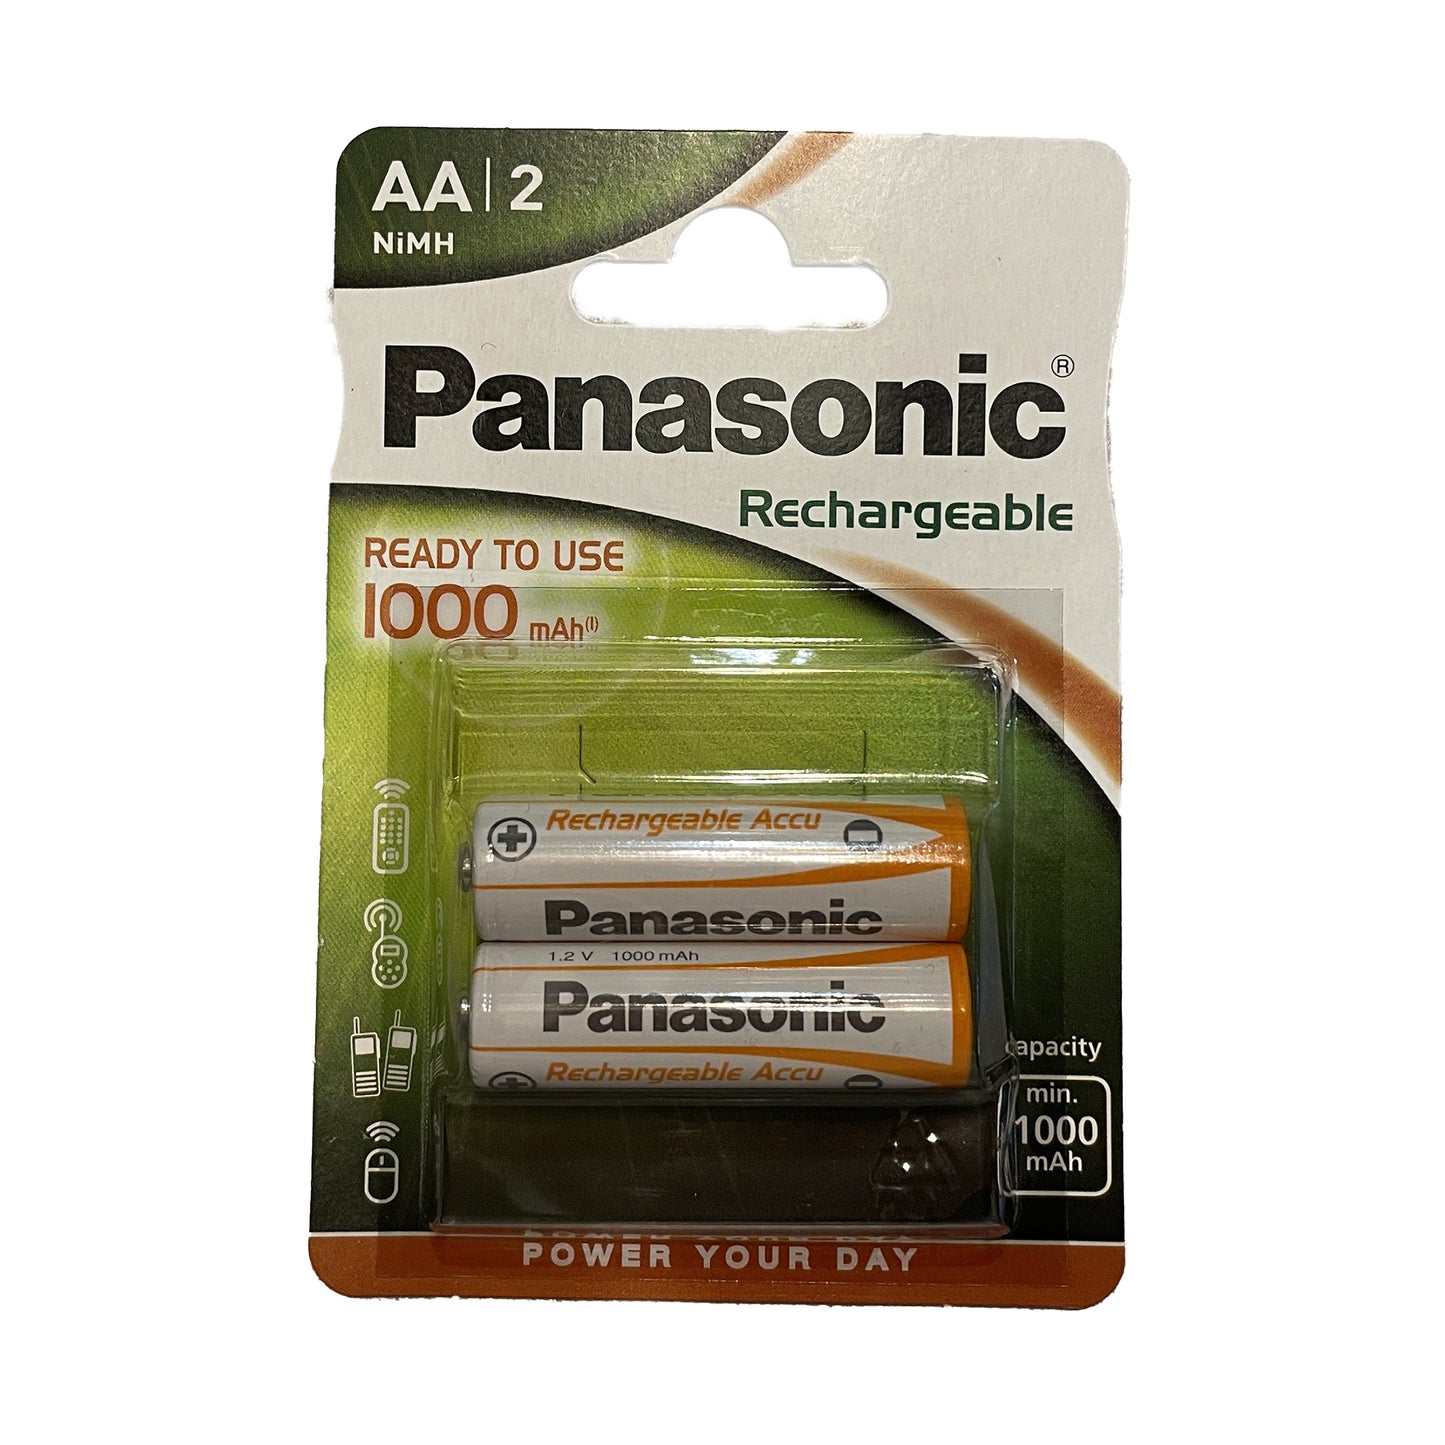 PAN-AA-REC-1000-2 - аккумуляторные батарейки Panasonic AA, 1000 мАч (2 шт. в блистере)